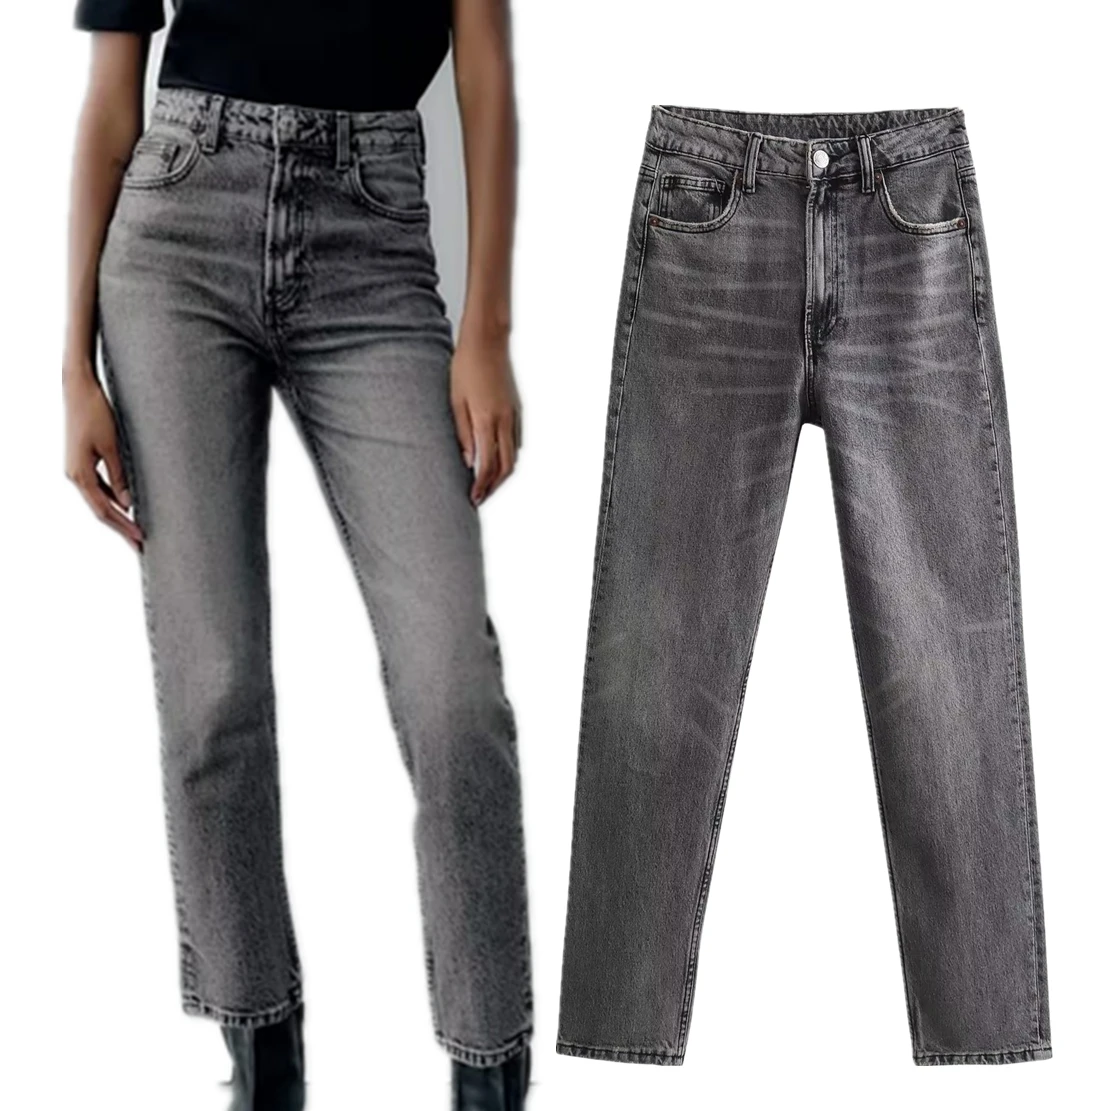 

Elmsk Vintage Mommy Jeans High Street Washed Old Straight Leg Jeans Women Casual Denim Pants